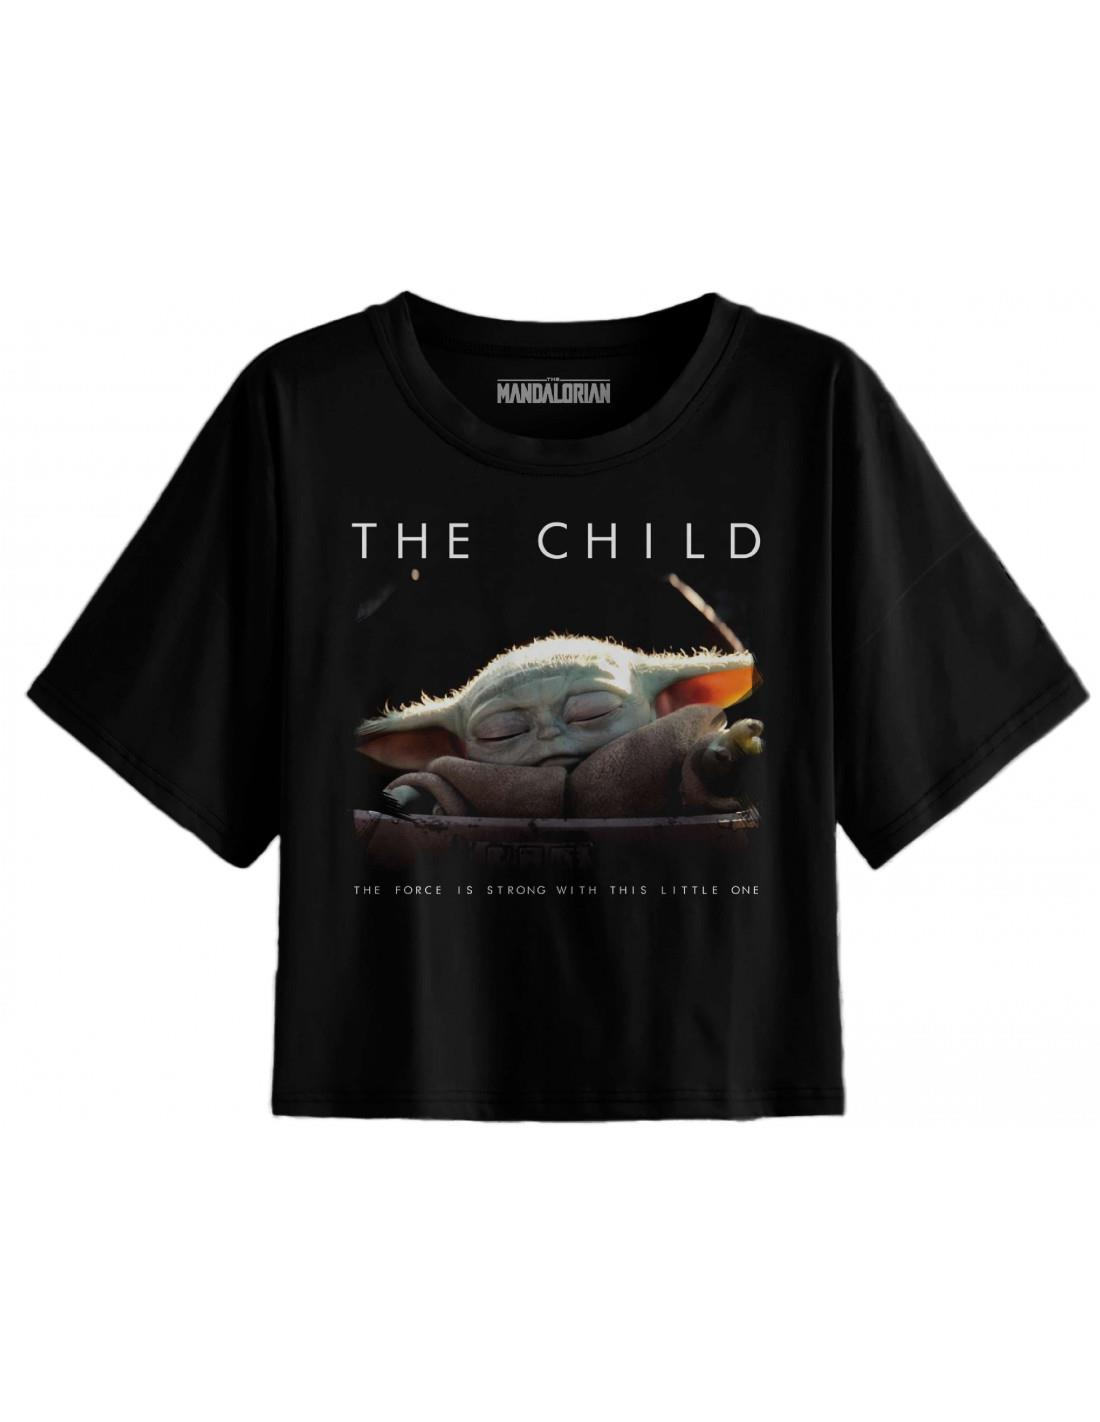 The Mandalorian - T-shirt Noir Femmes  The Child - M